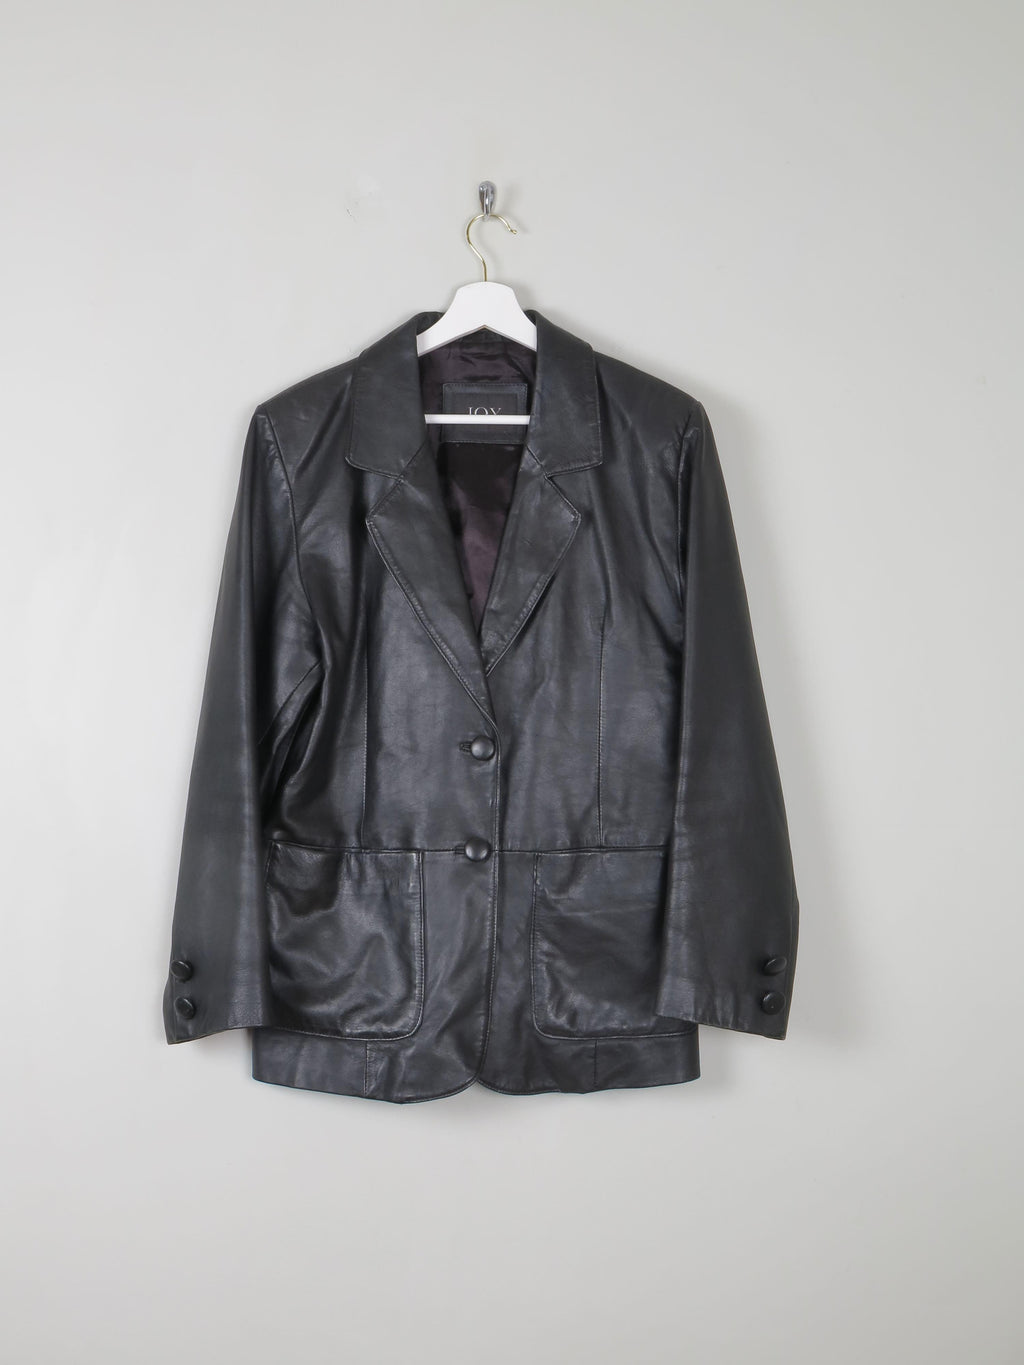 Women's Black Leather Vintage Jacket M